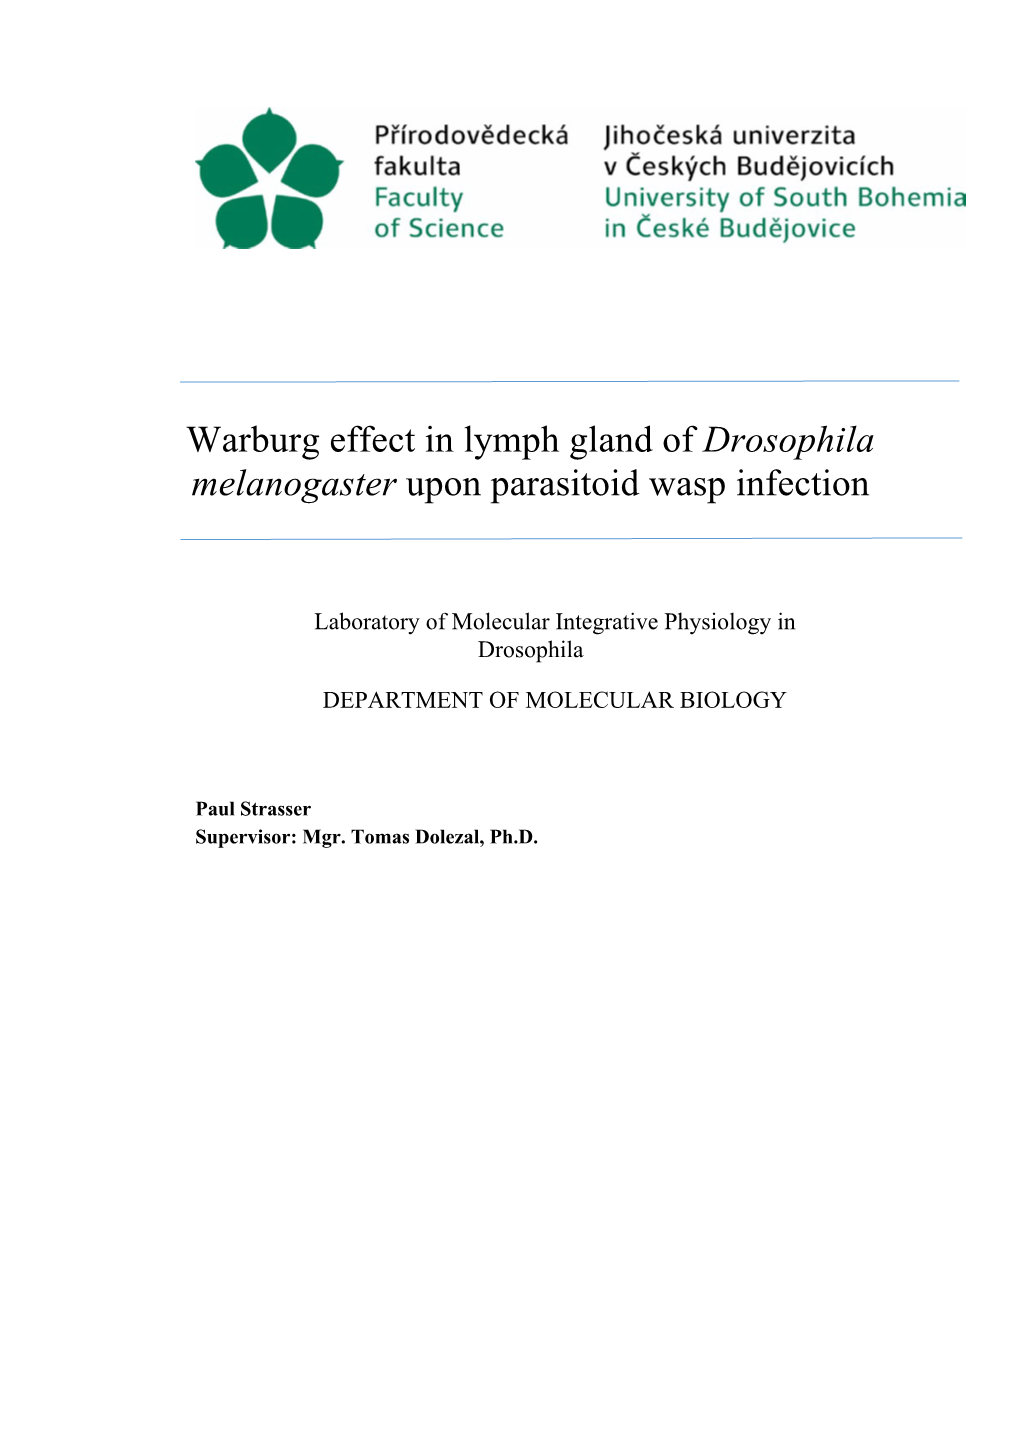 Warburg Effect in Lymph Gland of Drosophila Melanogaster Upon Parasitoid Wasp Infection